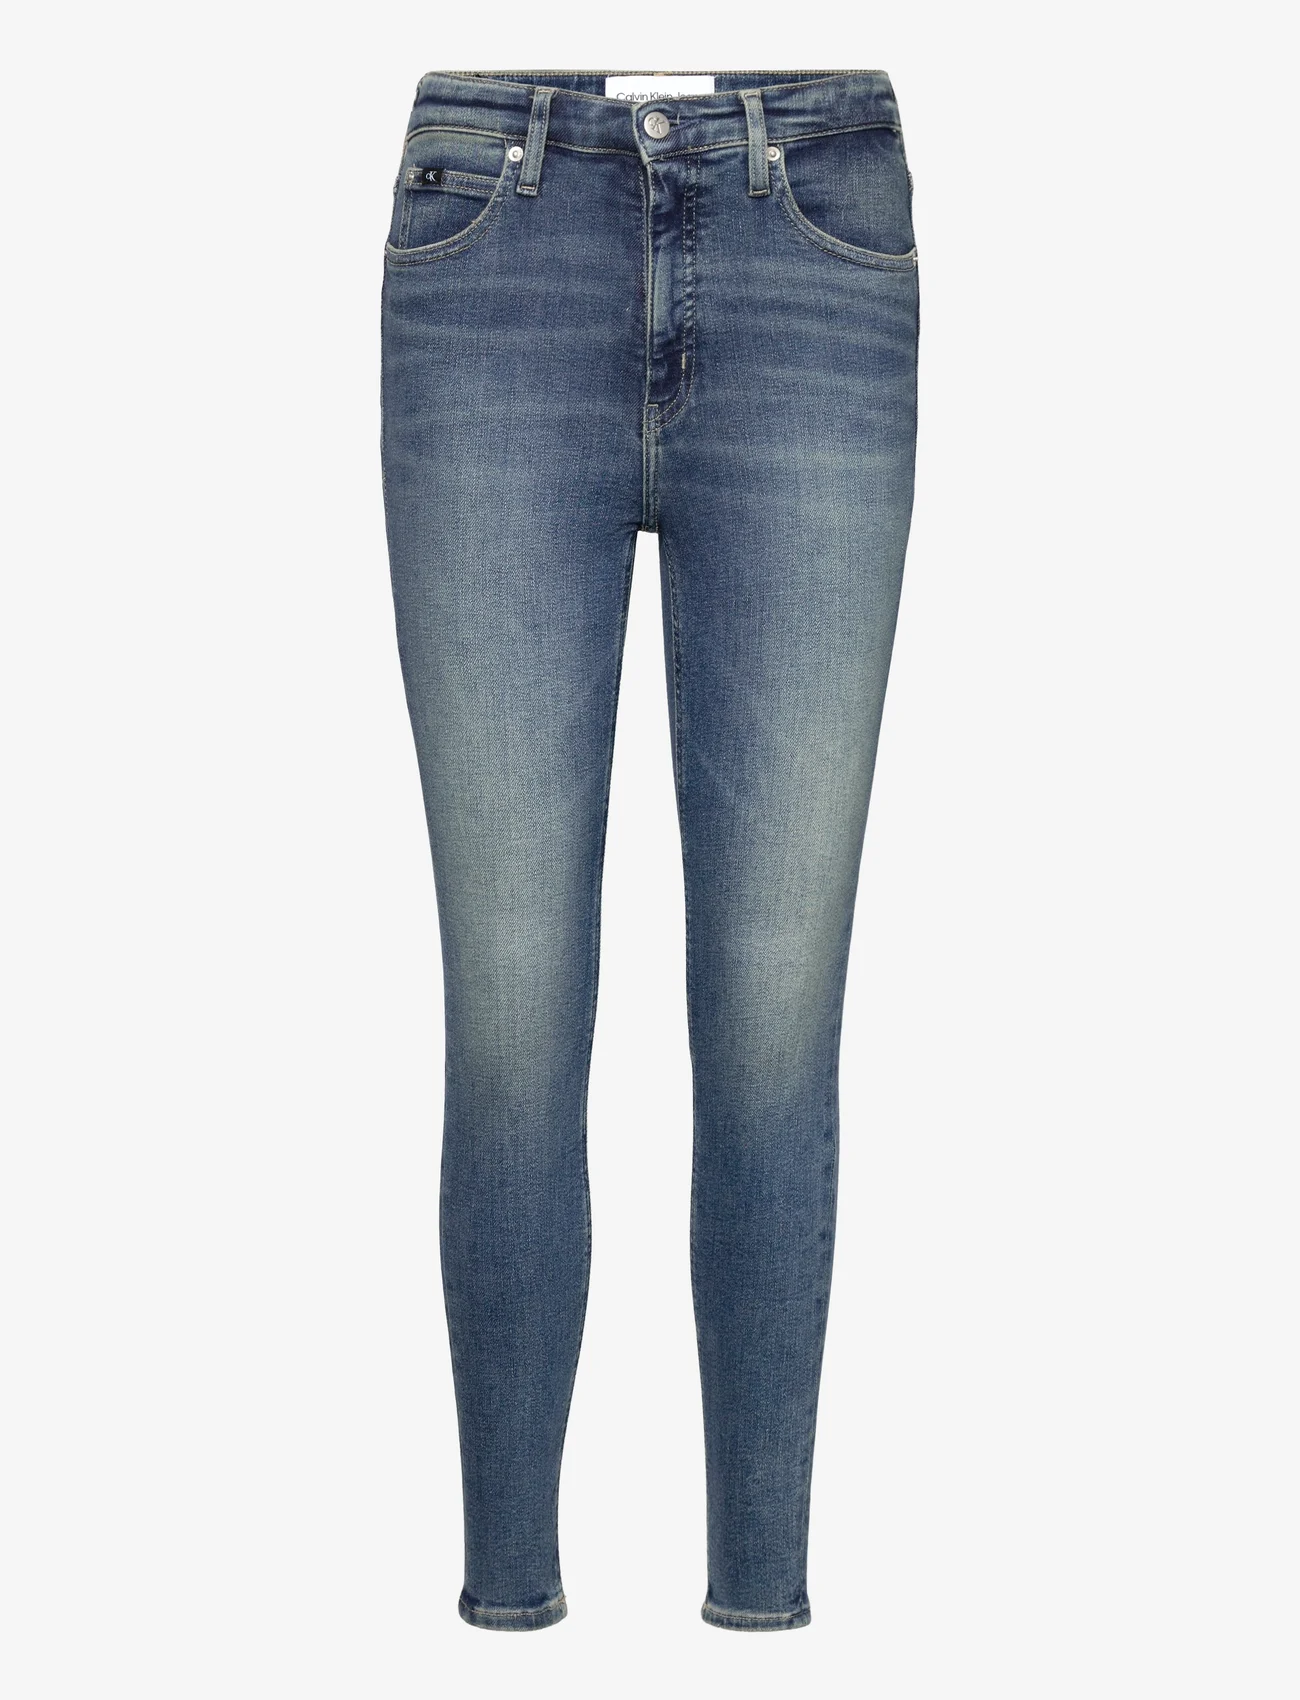 Calvin Klein Jeans - HIGH RISE SUPER SKINNY ANKLE - dżinsy skinny fit - denim medium - 0